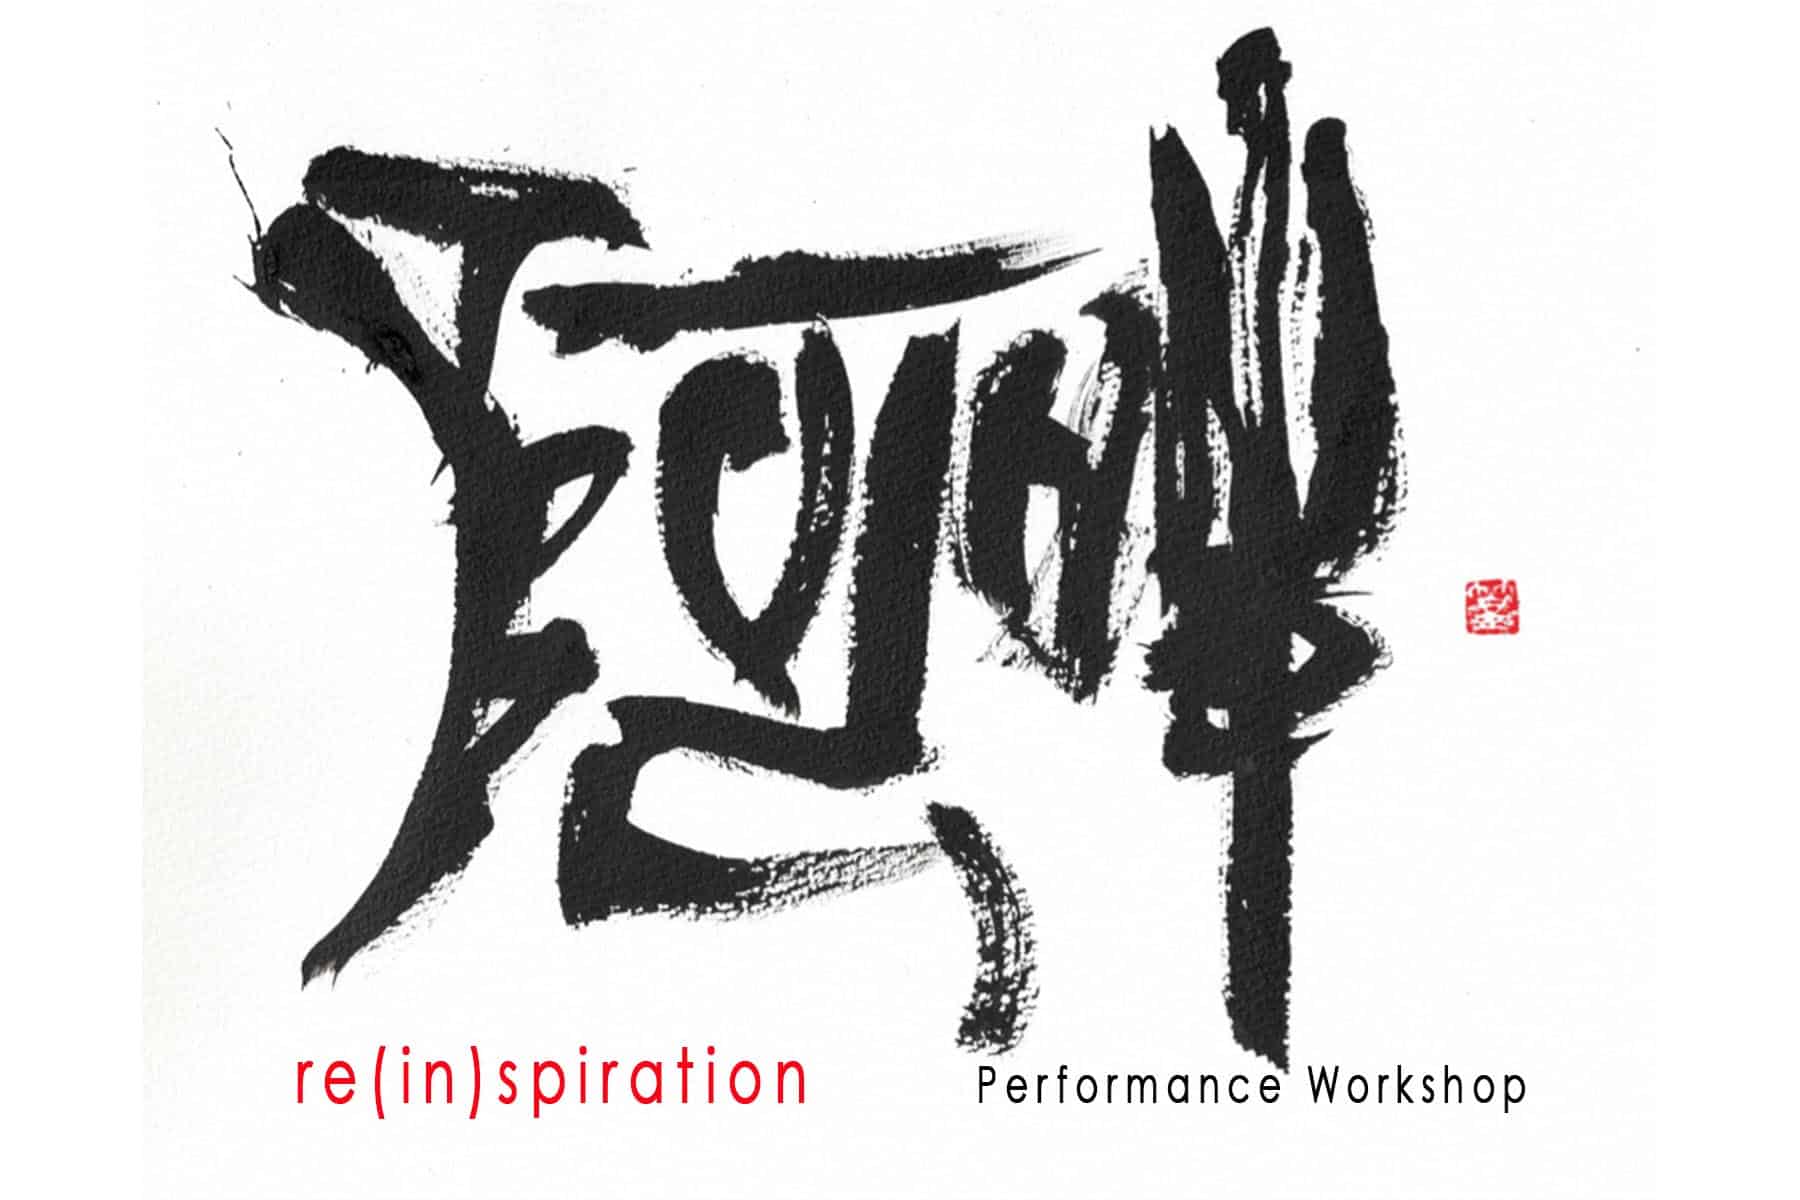 Re(inspiration) Performance Workshop